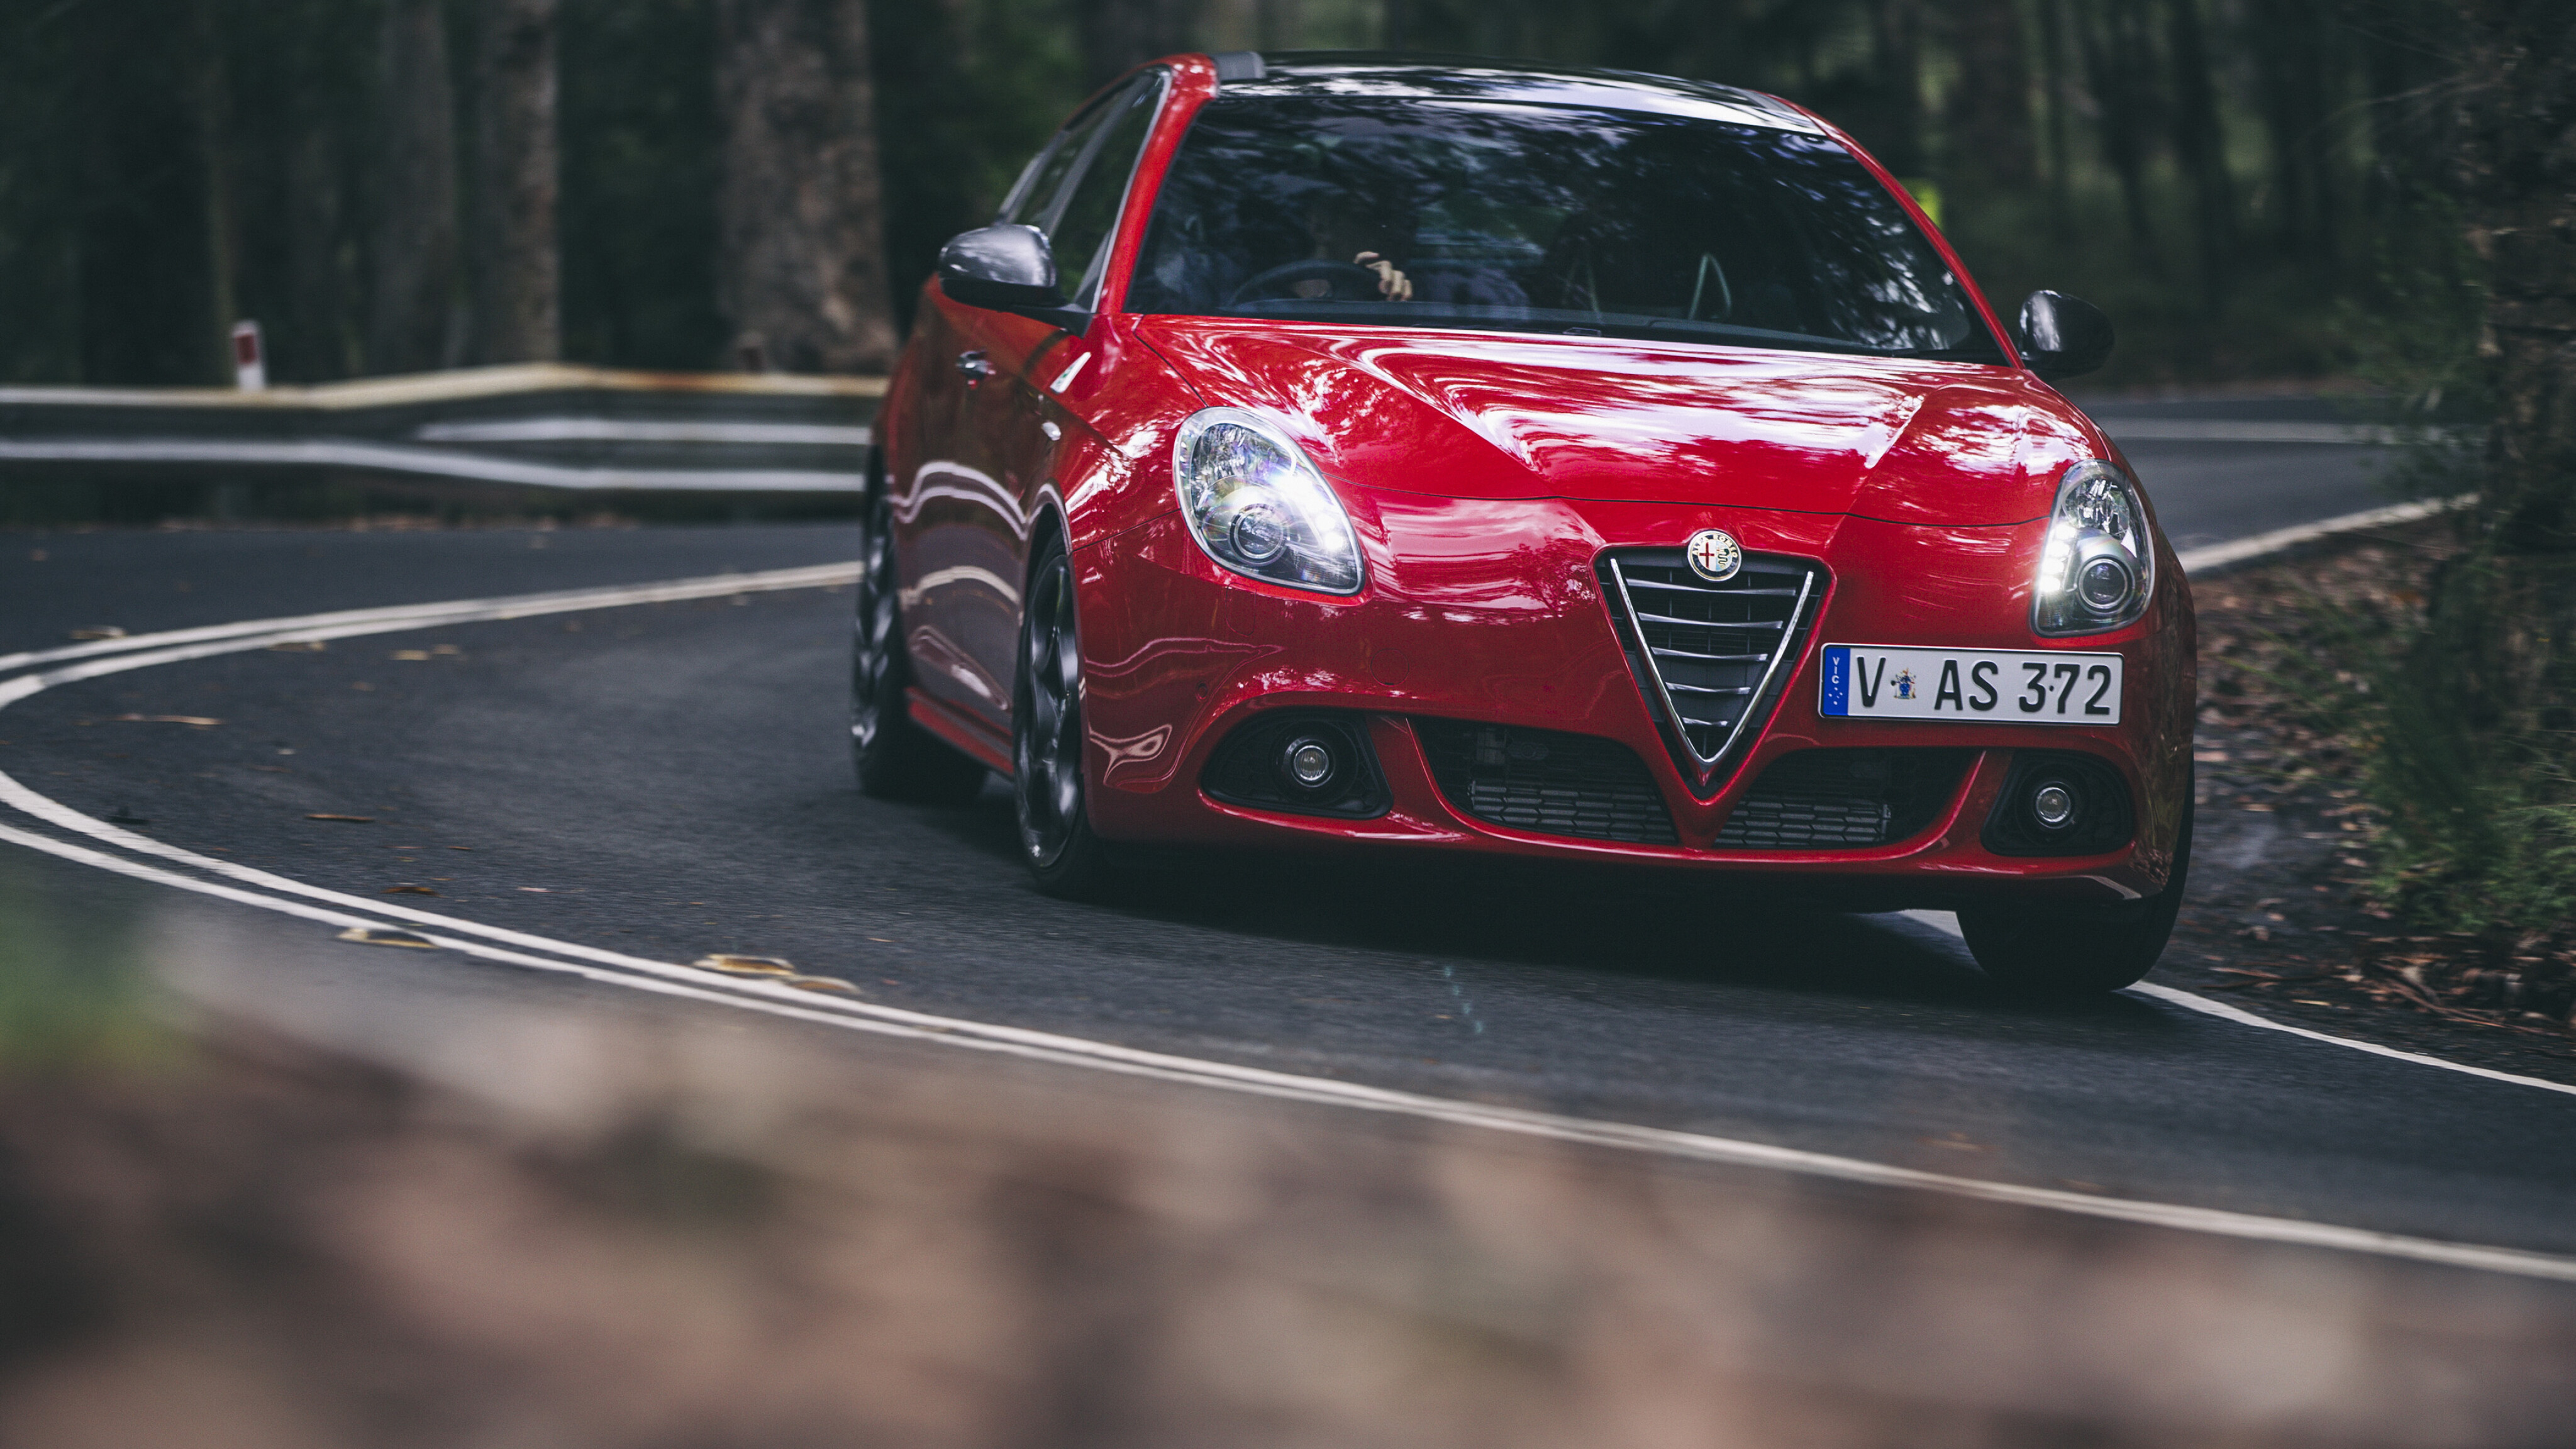 Alfa Romeo Giulietta QV 2015 review - Car Keys 